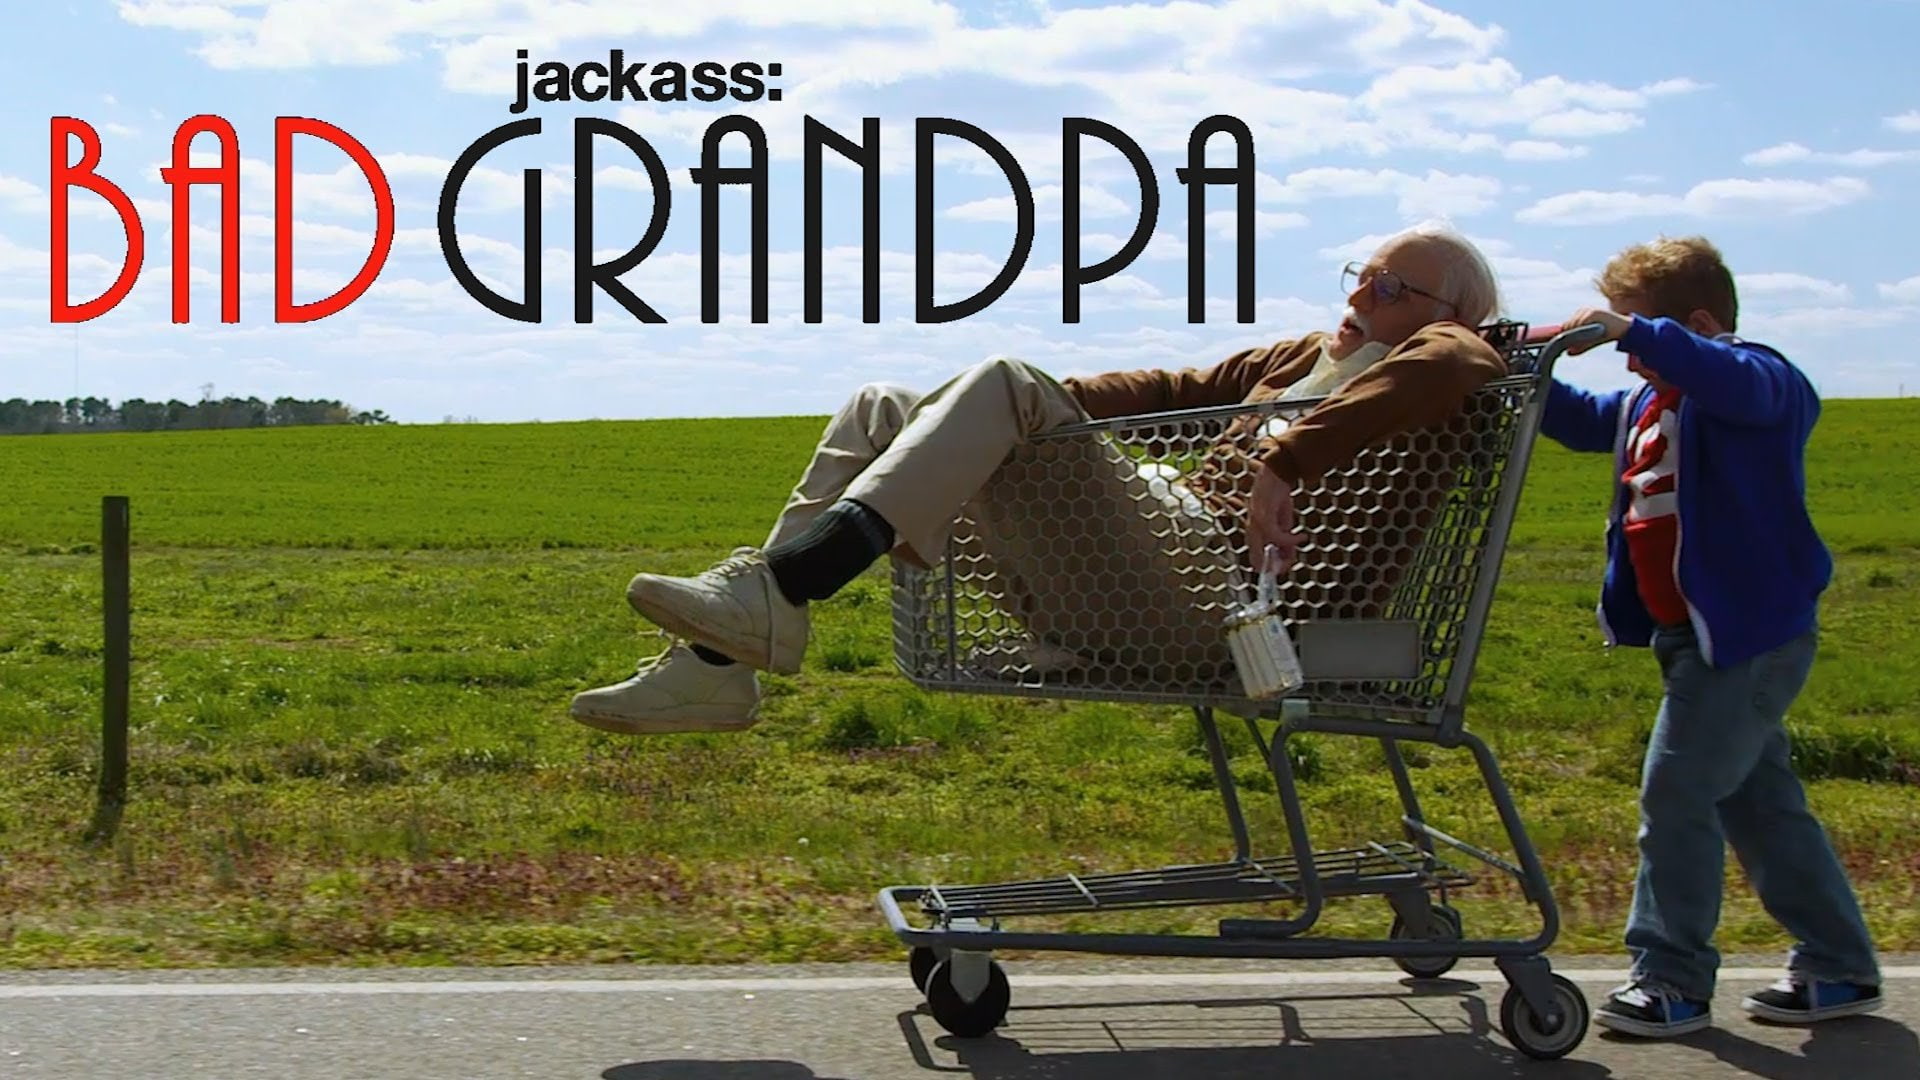 bad, comedy, grandpa, jackass, reality